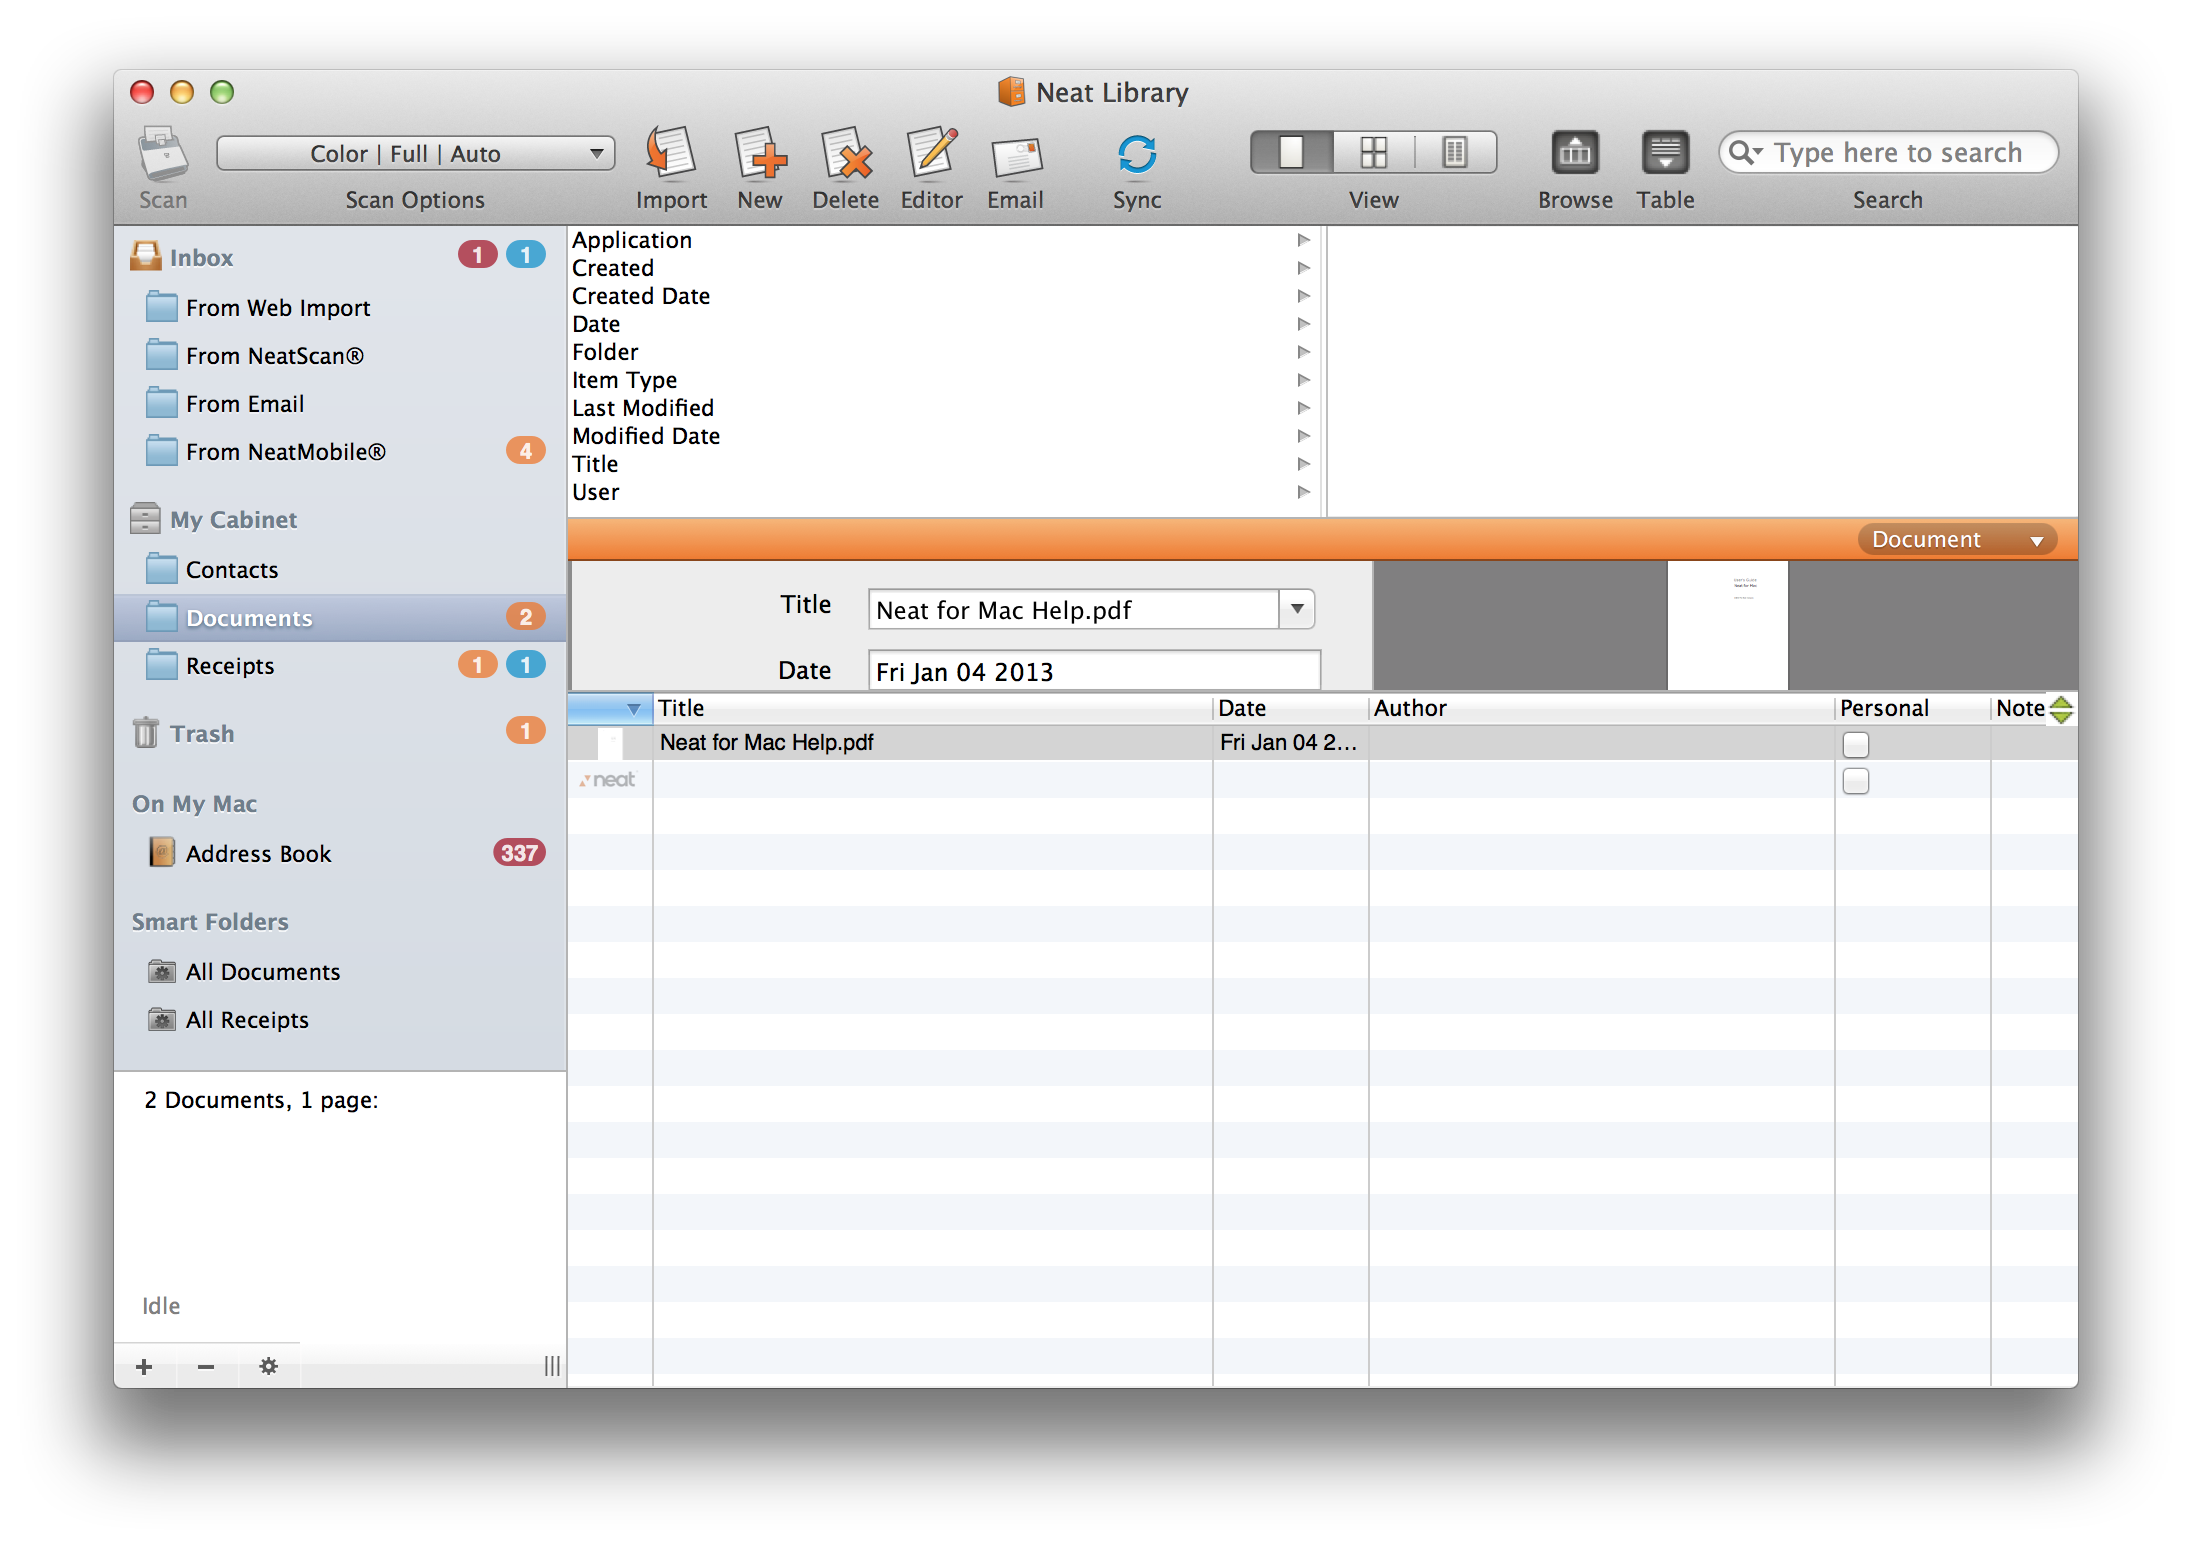 neatdesk software for mac download